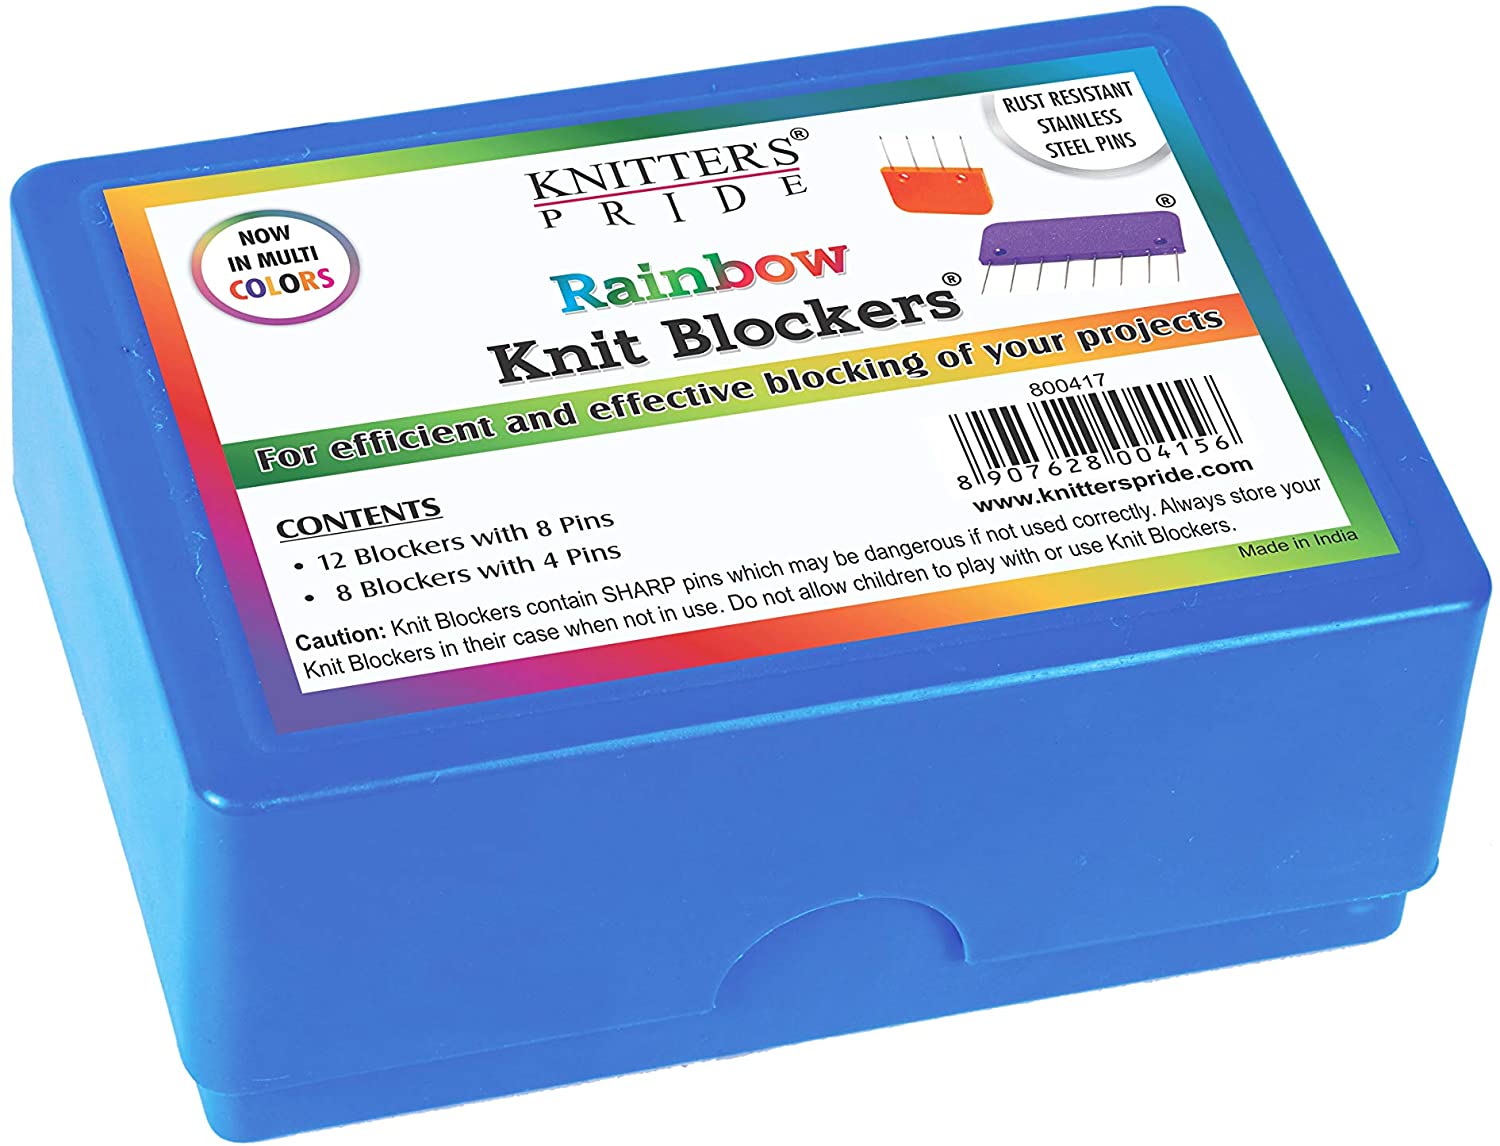 Knitters Pride Knit Blockers (pack of 20)